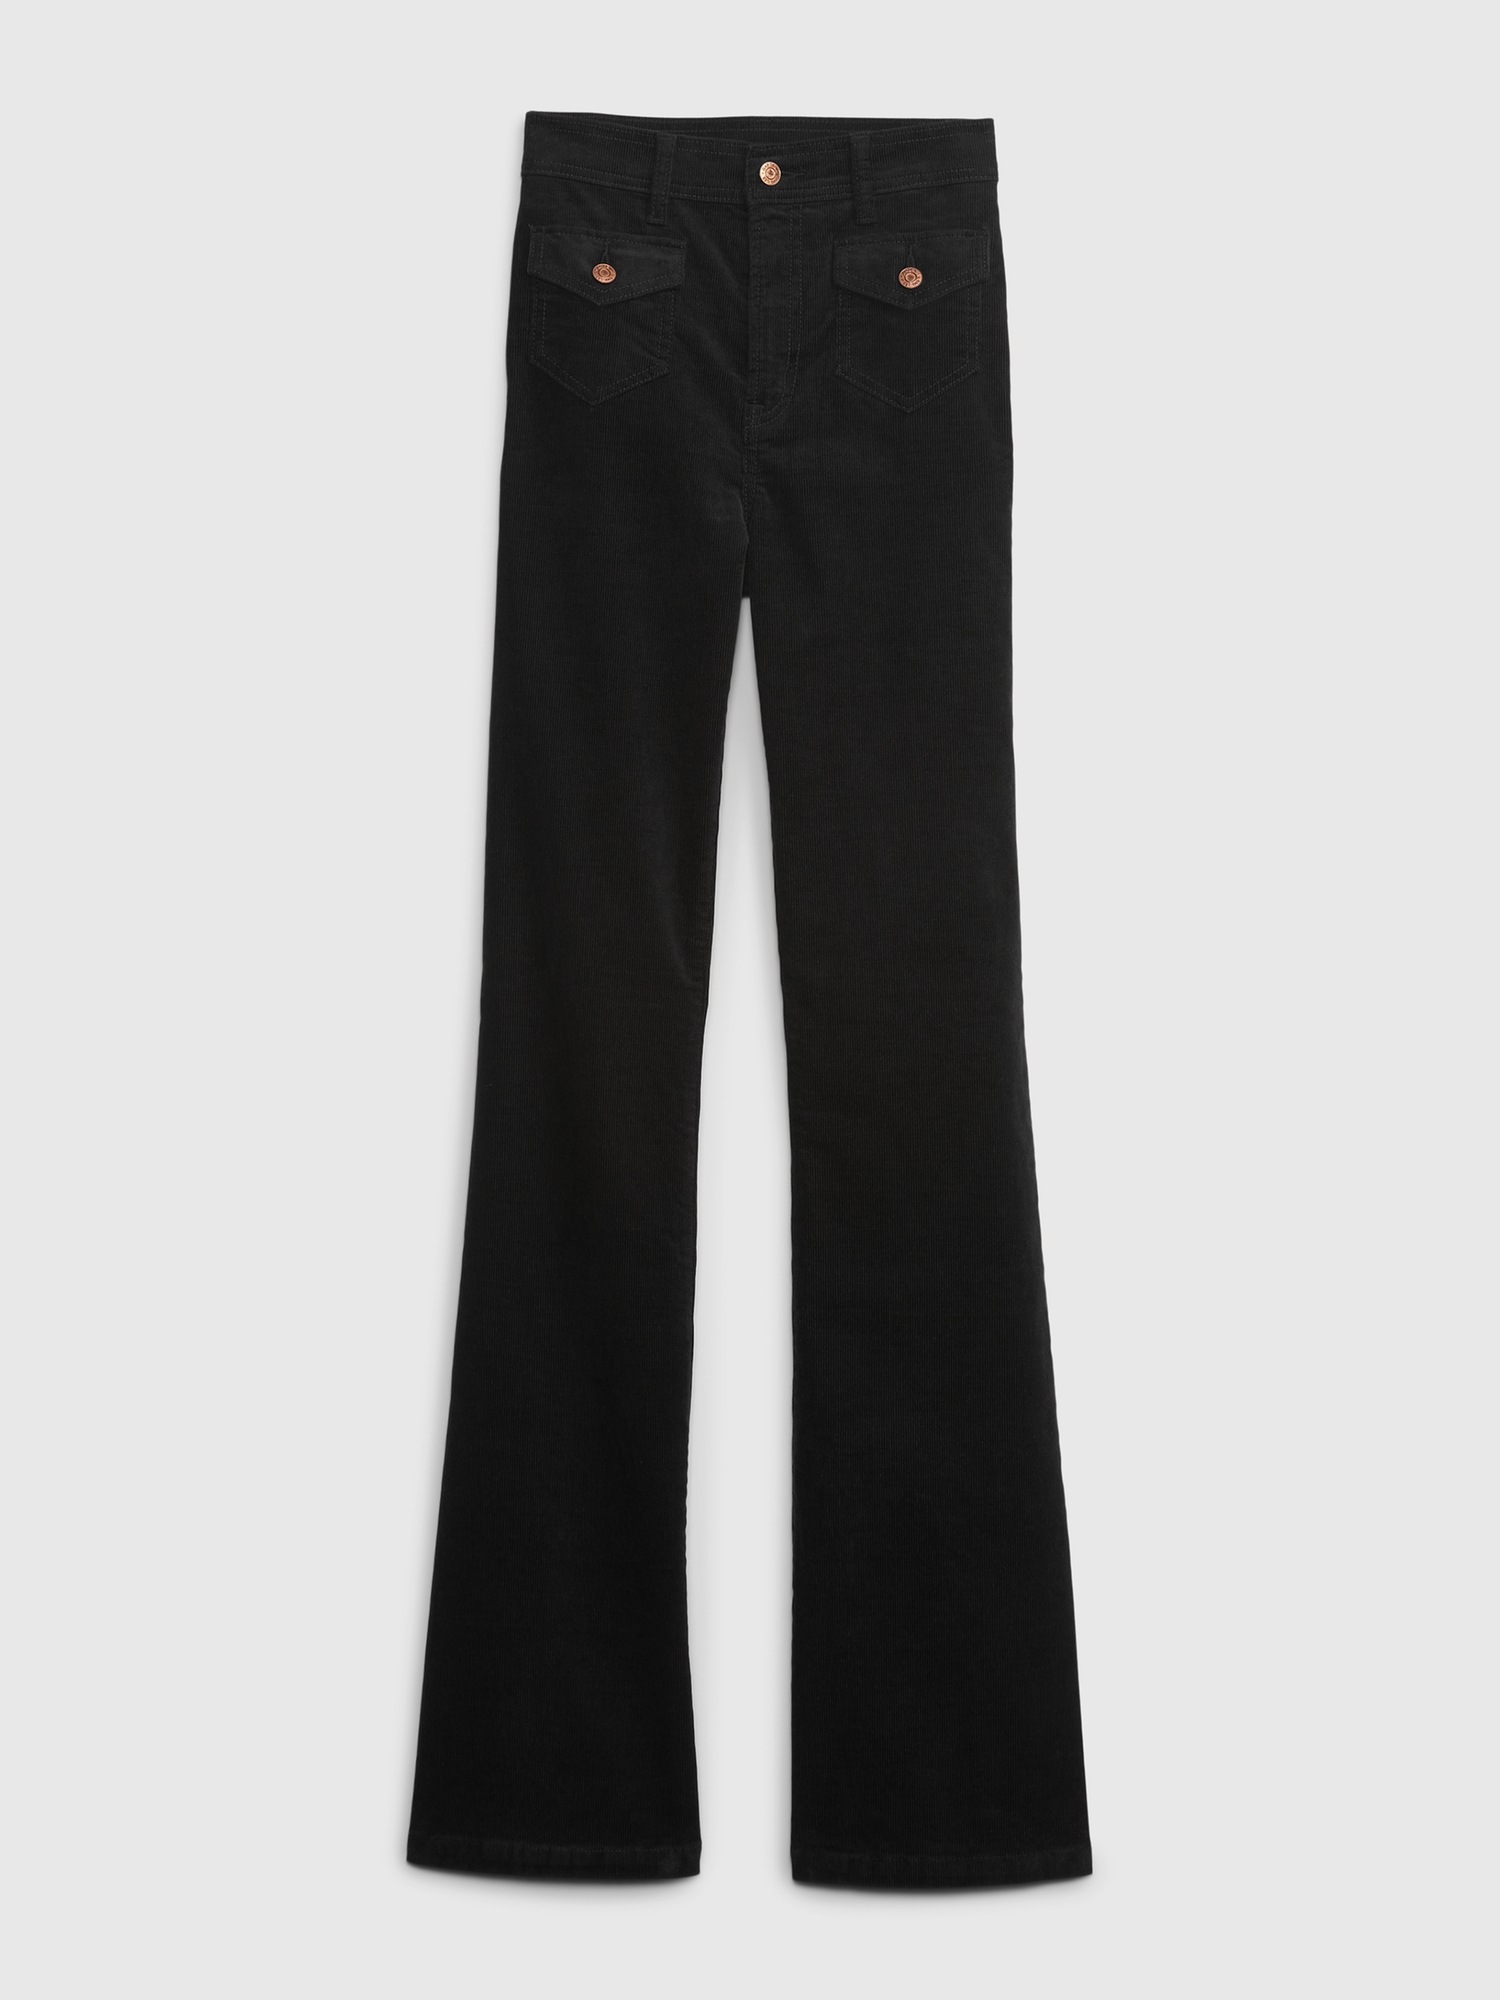 High Rise Corduroy '70s Flare Pants